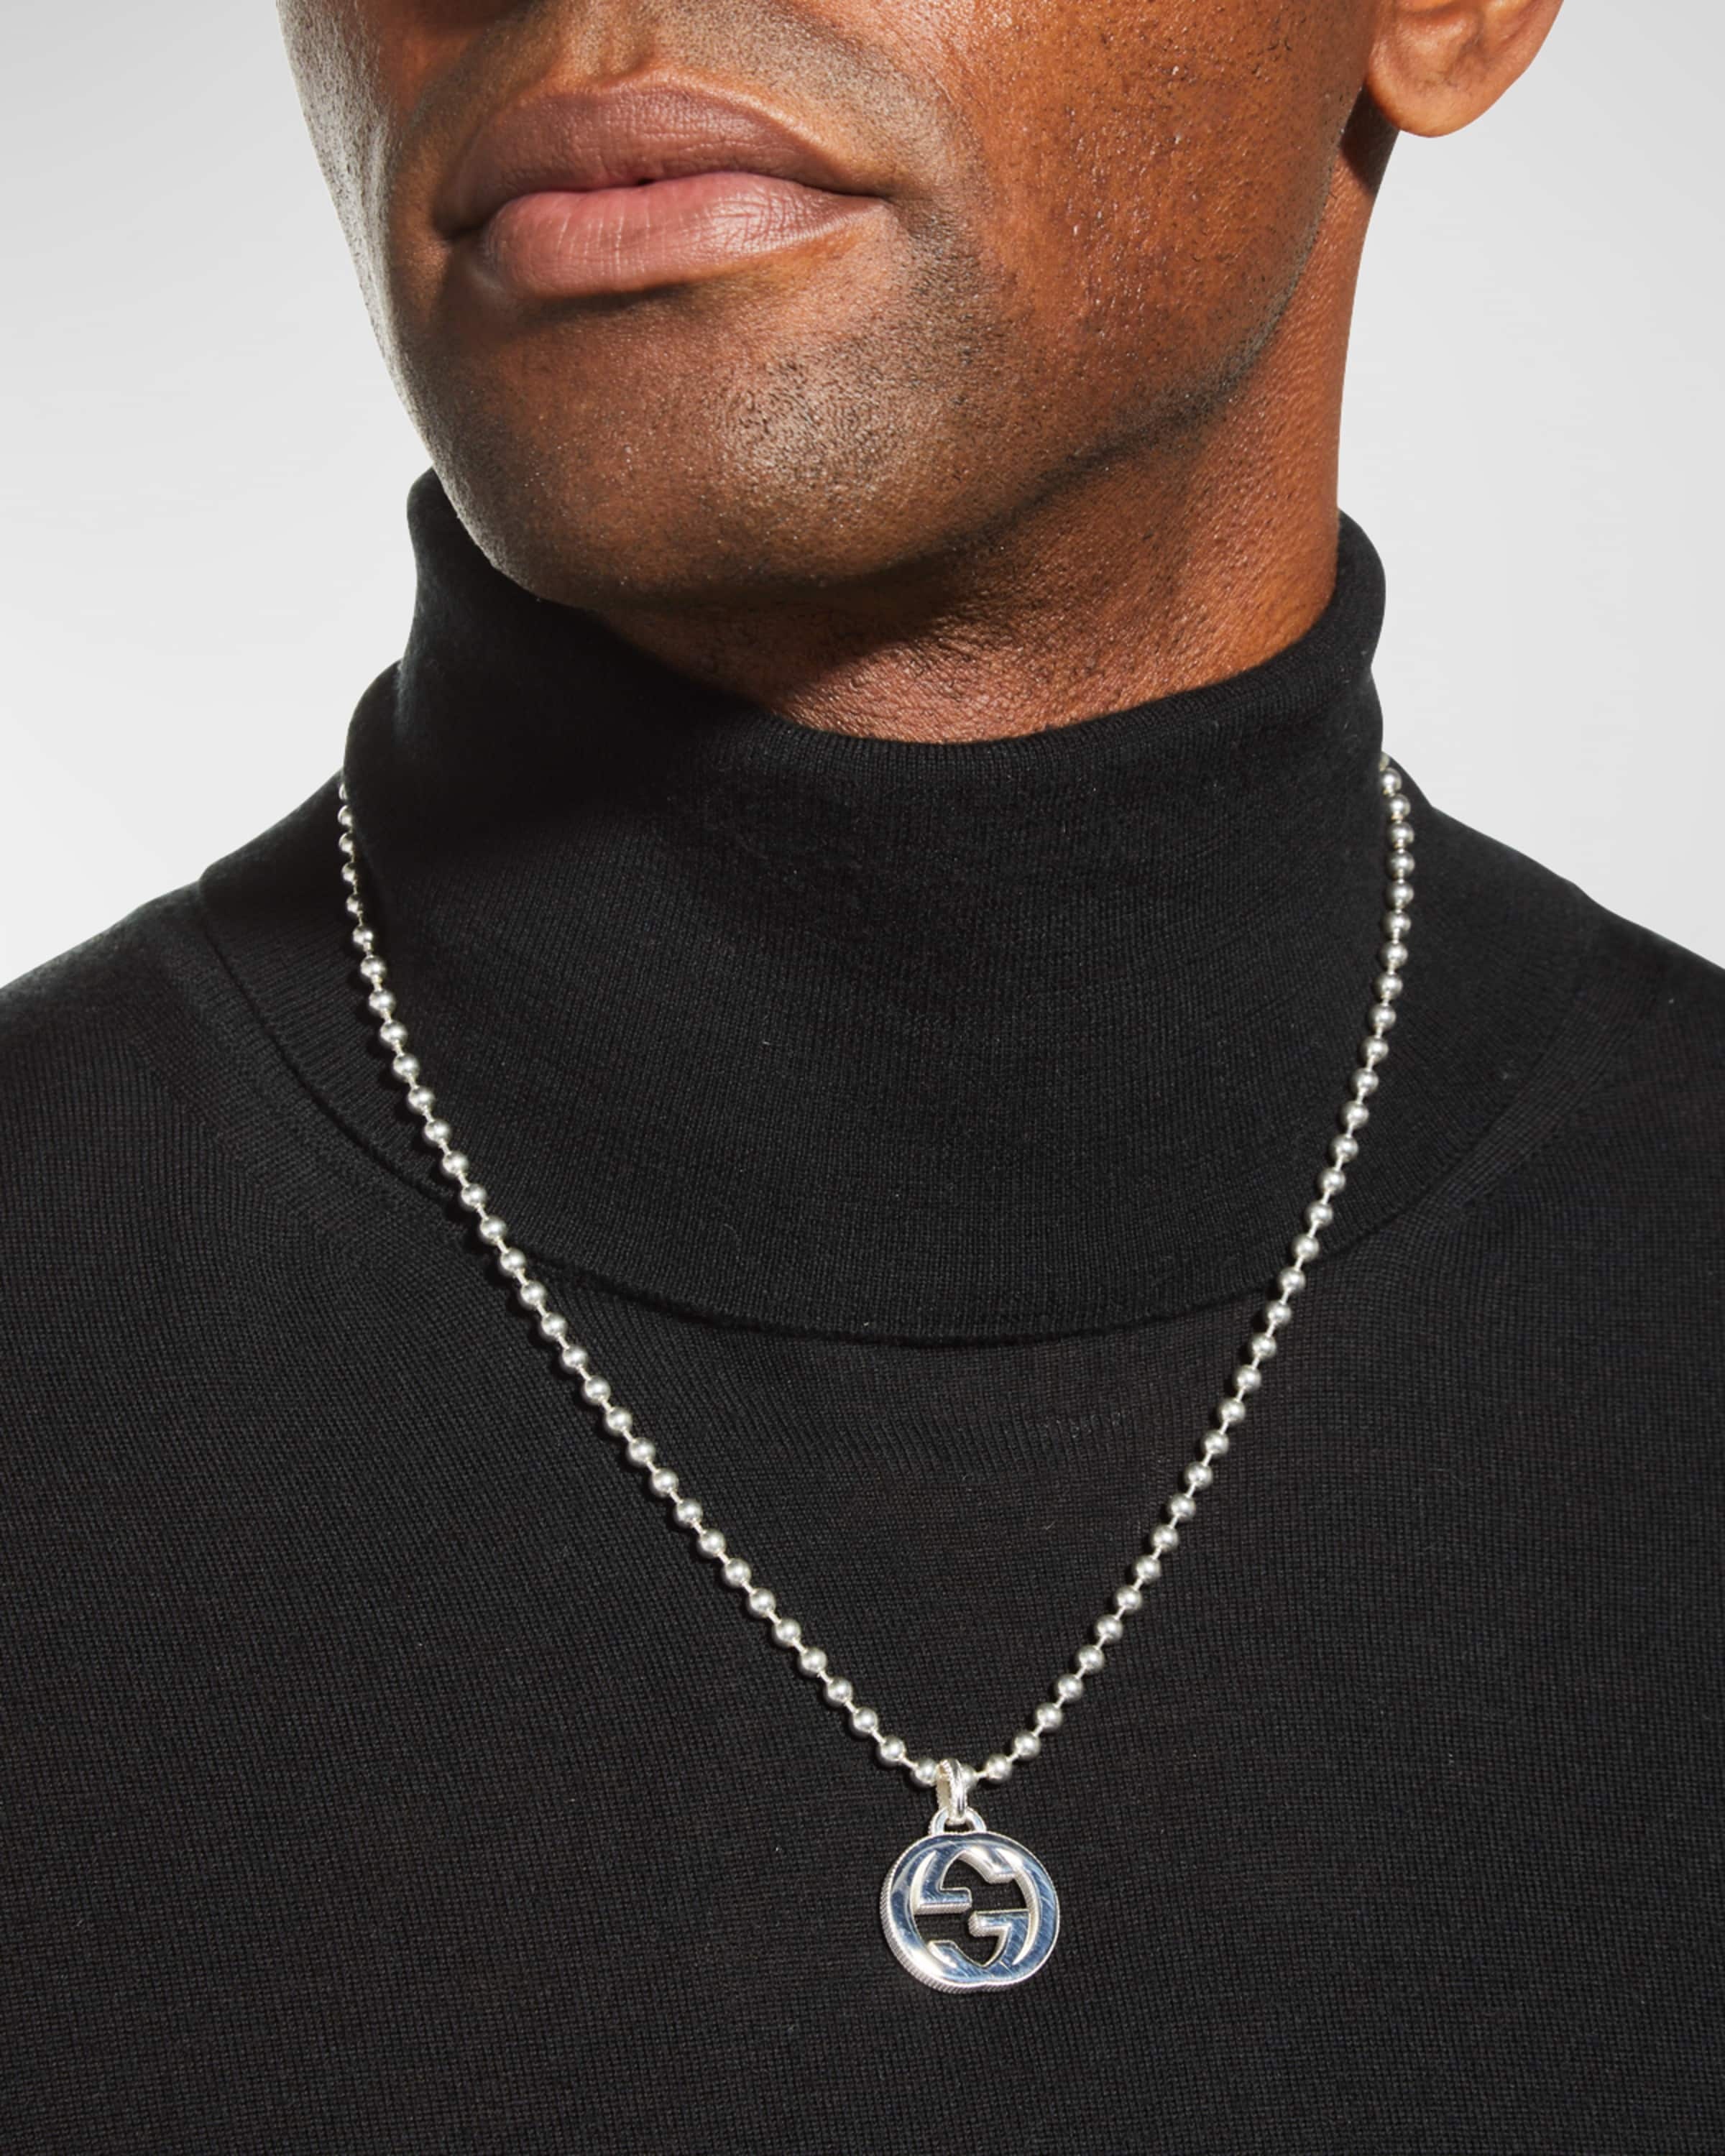 Men's Interlocking GG Pendant Necklace - 2